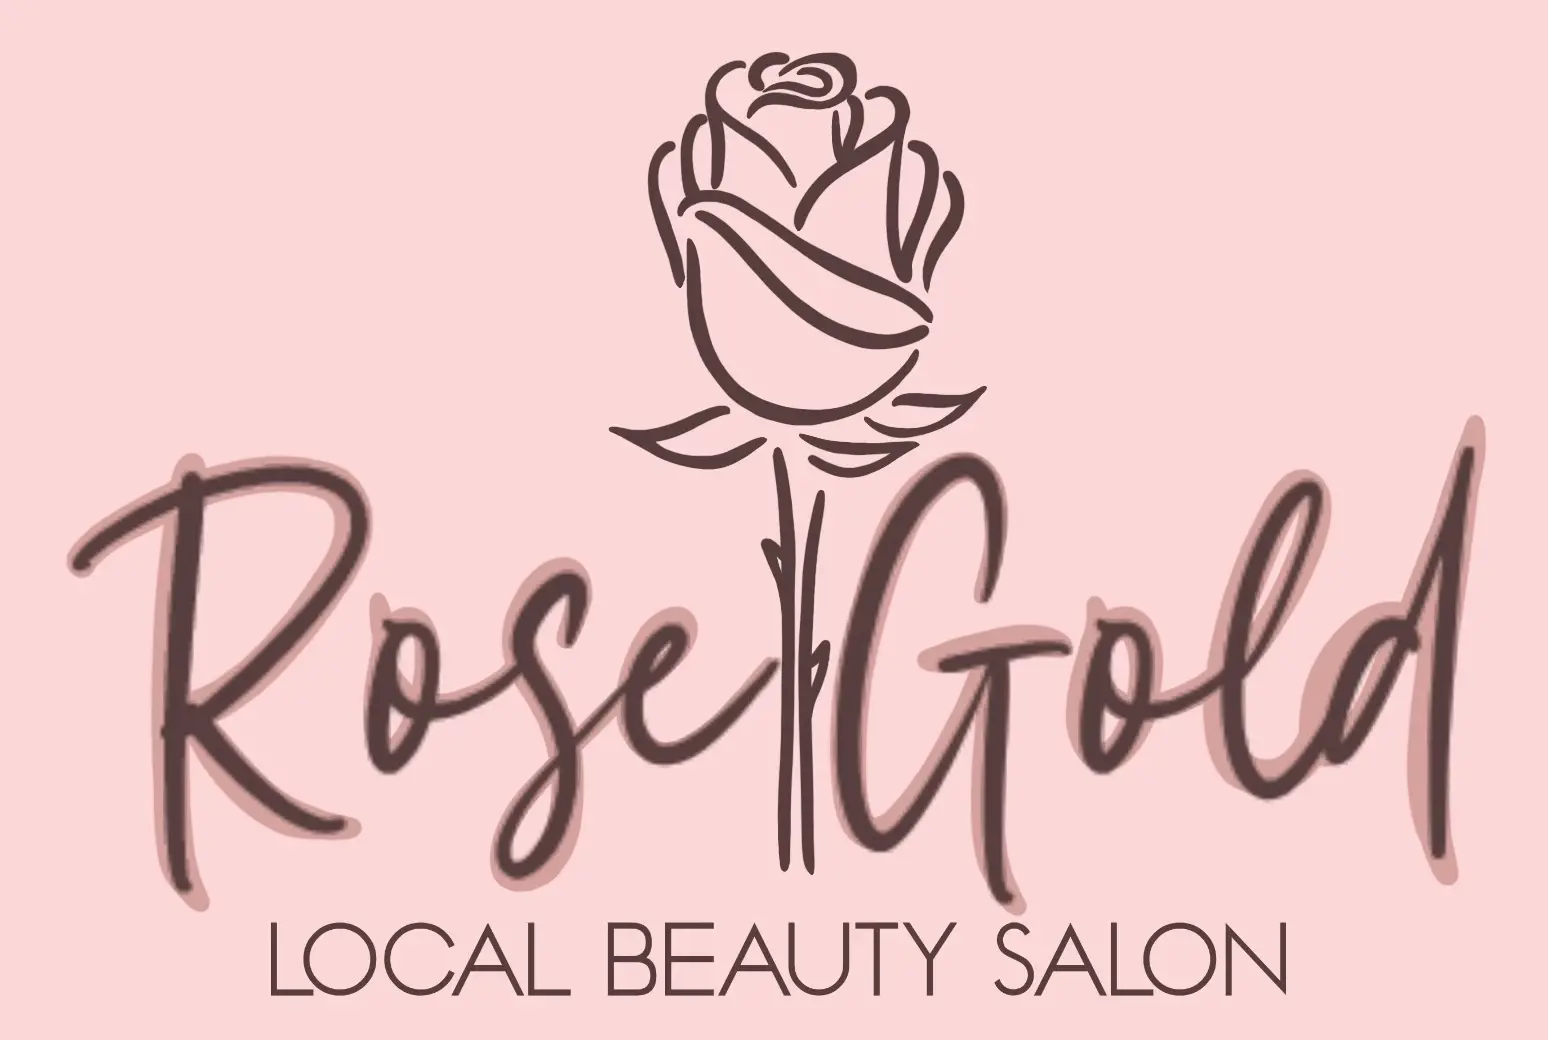 A logo of a rose gold salon